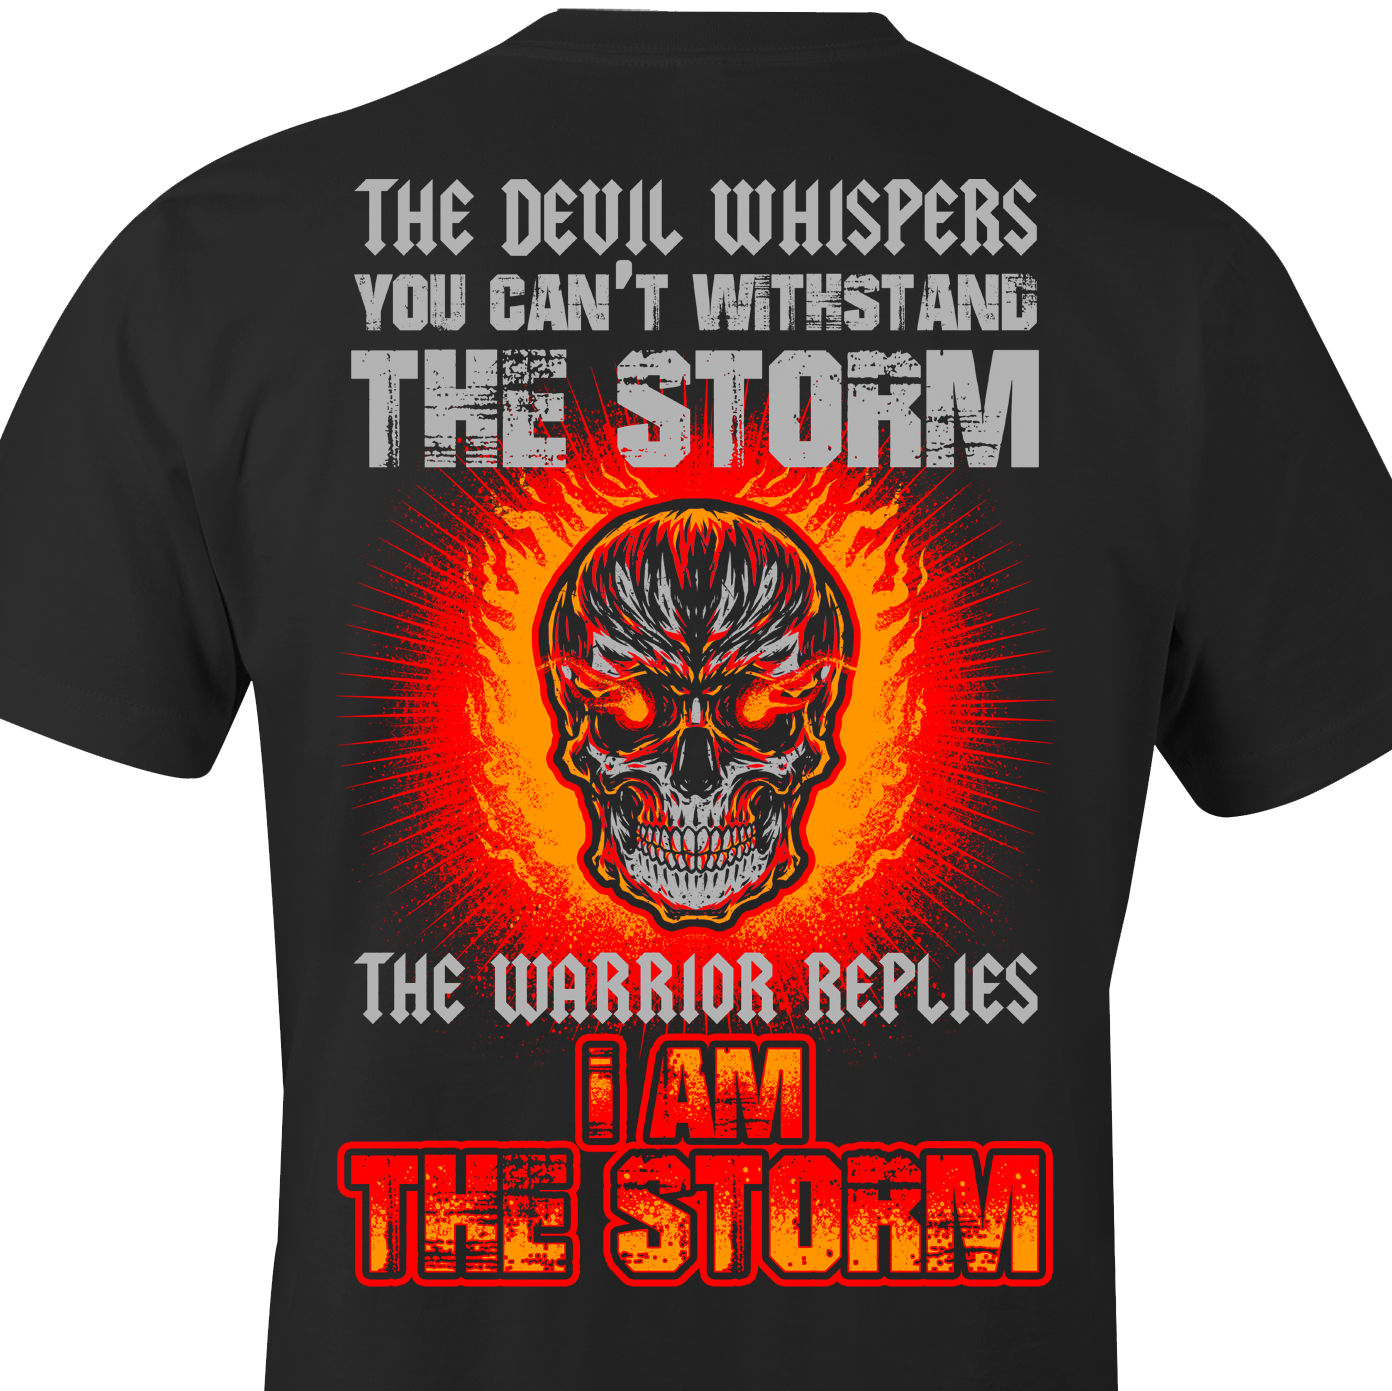 Devil Whispers Shirt - I AM THE STORM